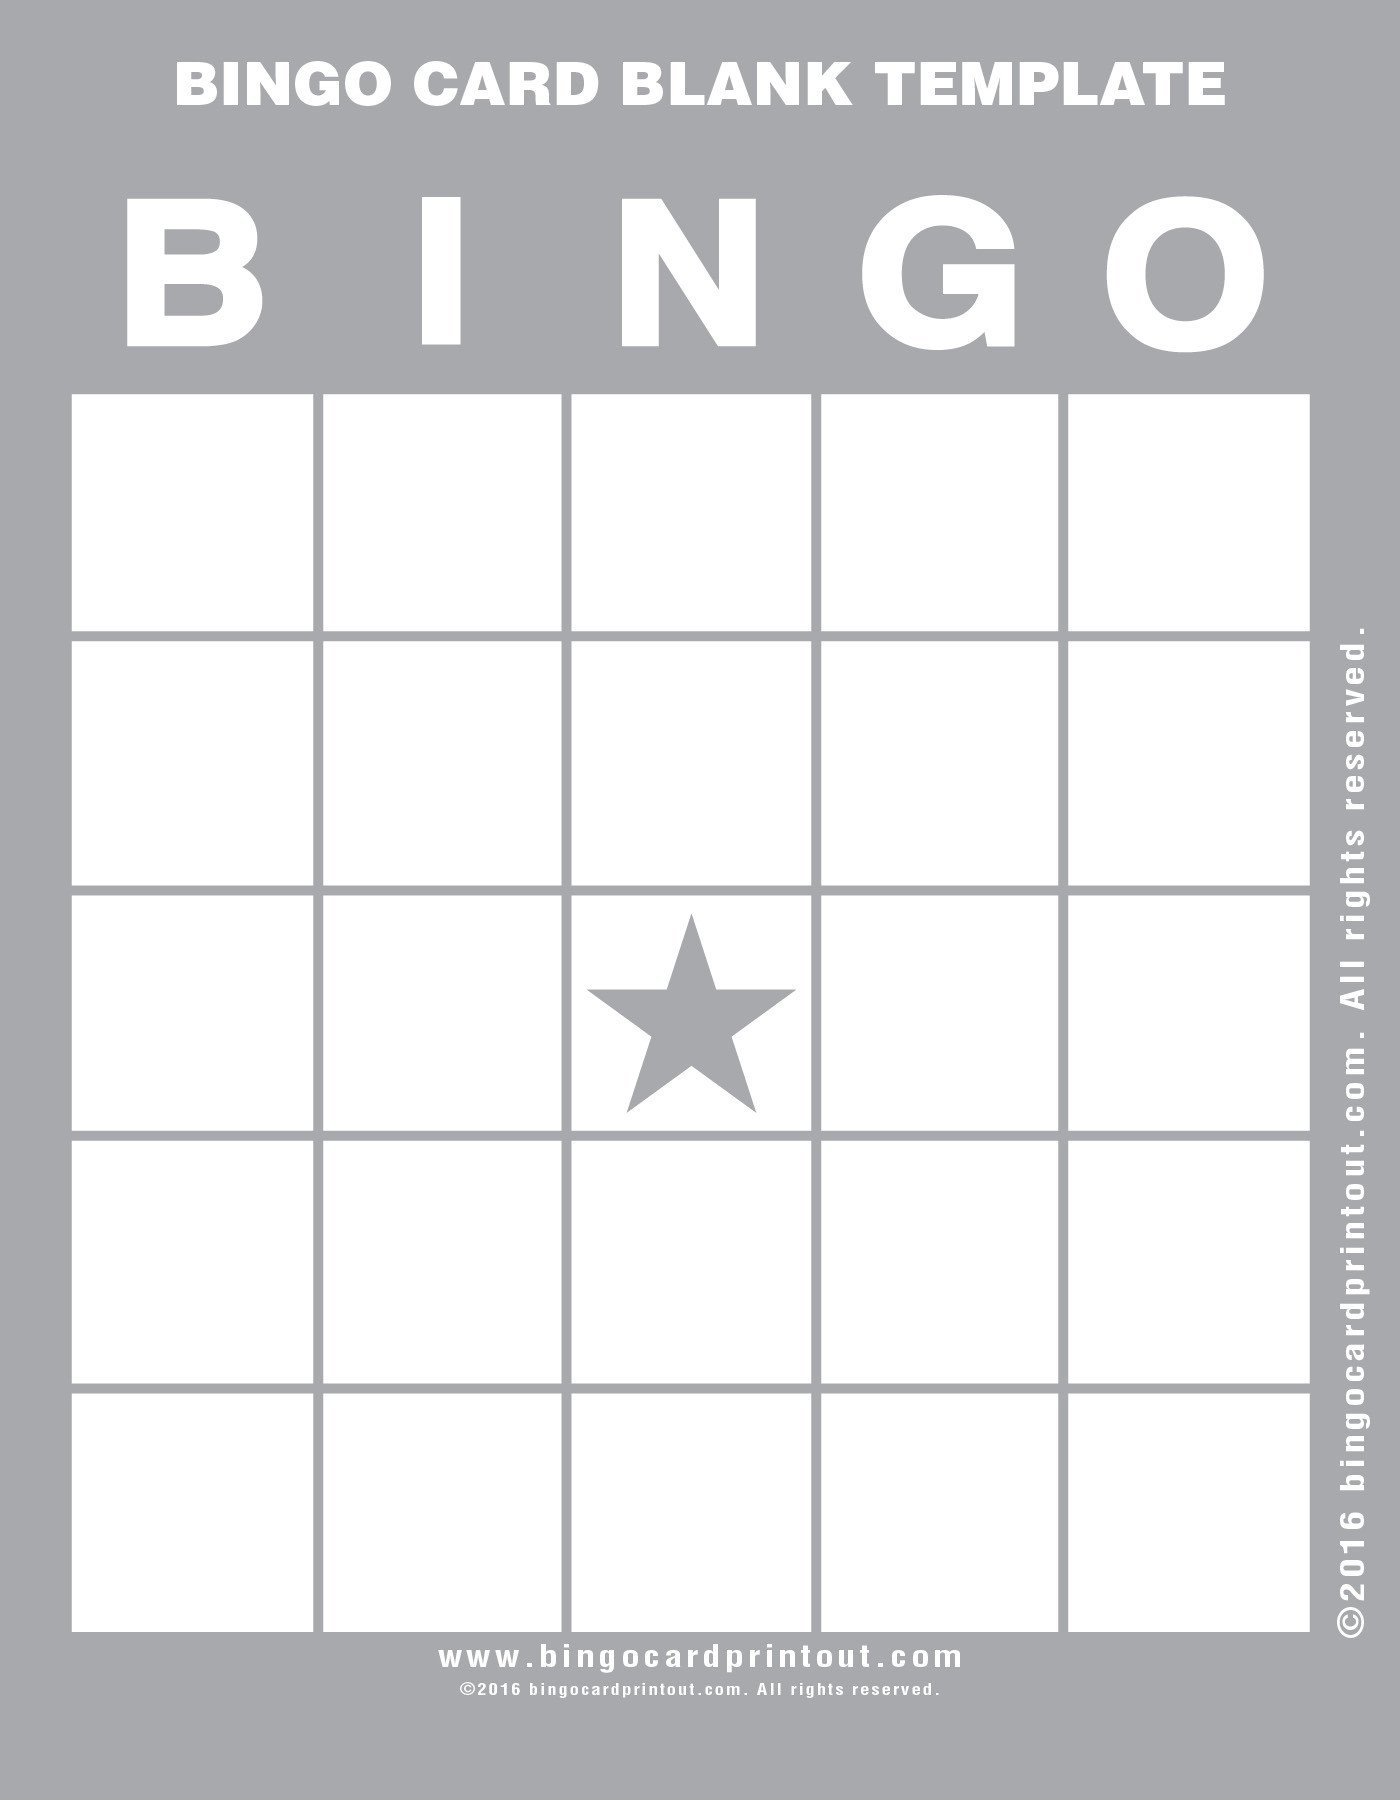 Free Bingo Card Template Bingo Card Blank Template Bingocardprintout